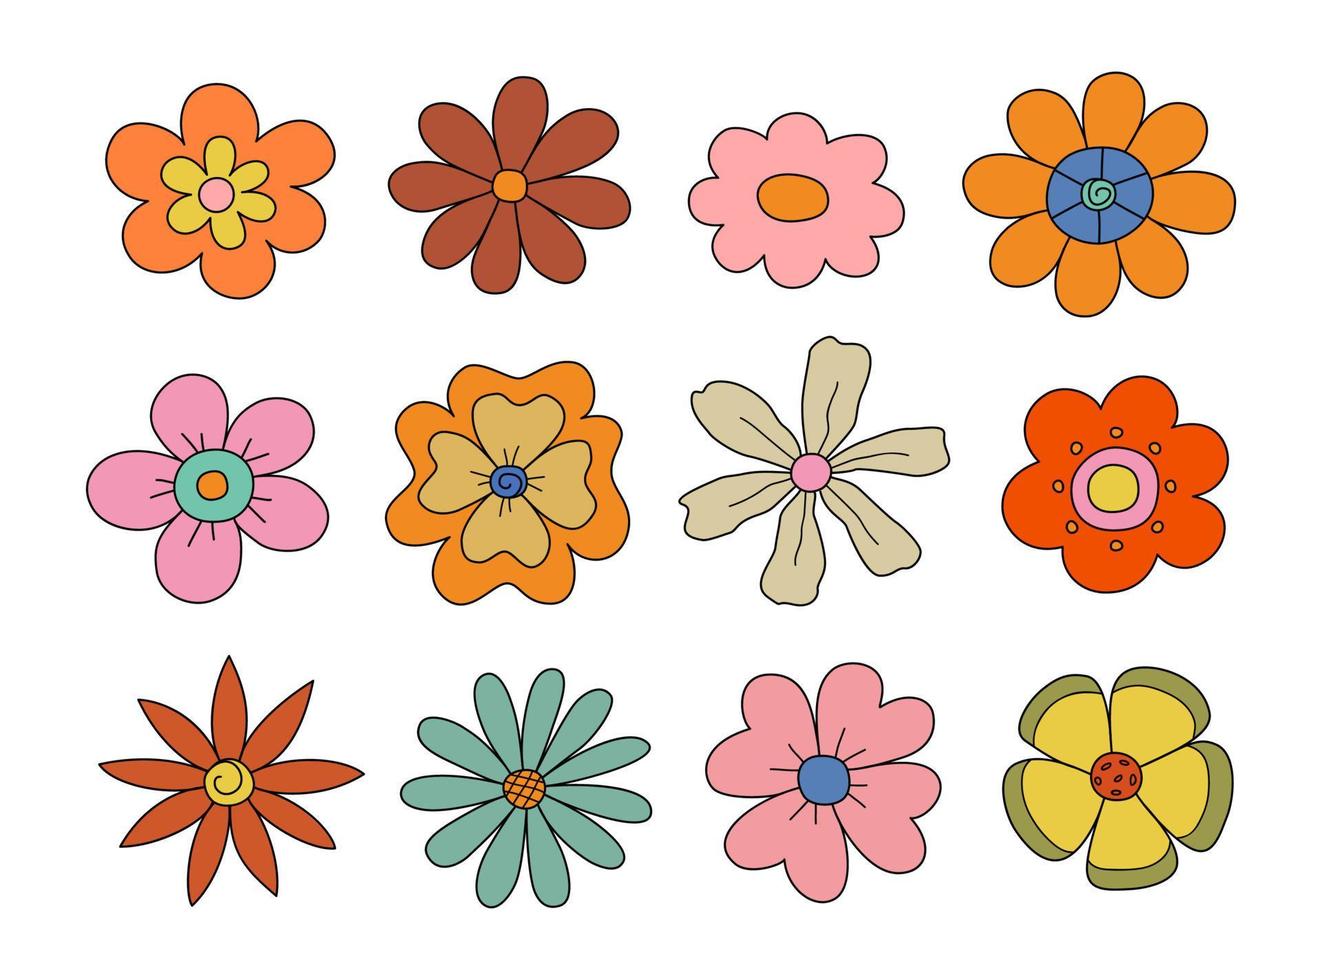 1970 tusensköna blommor. samling av olika retroblommor. vektor illustration isolerad på en vit bakgrund.